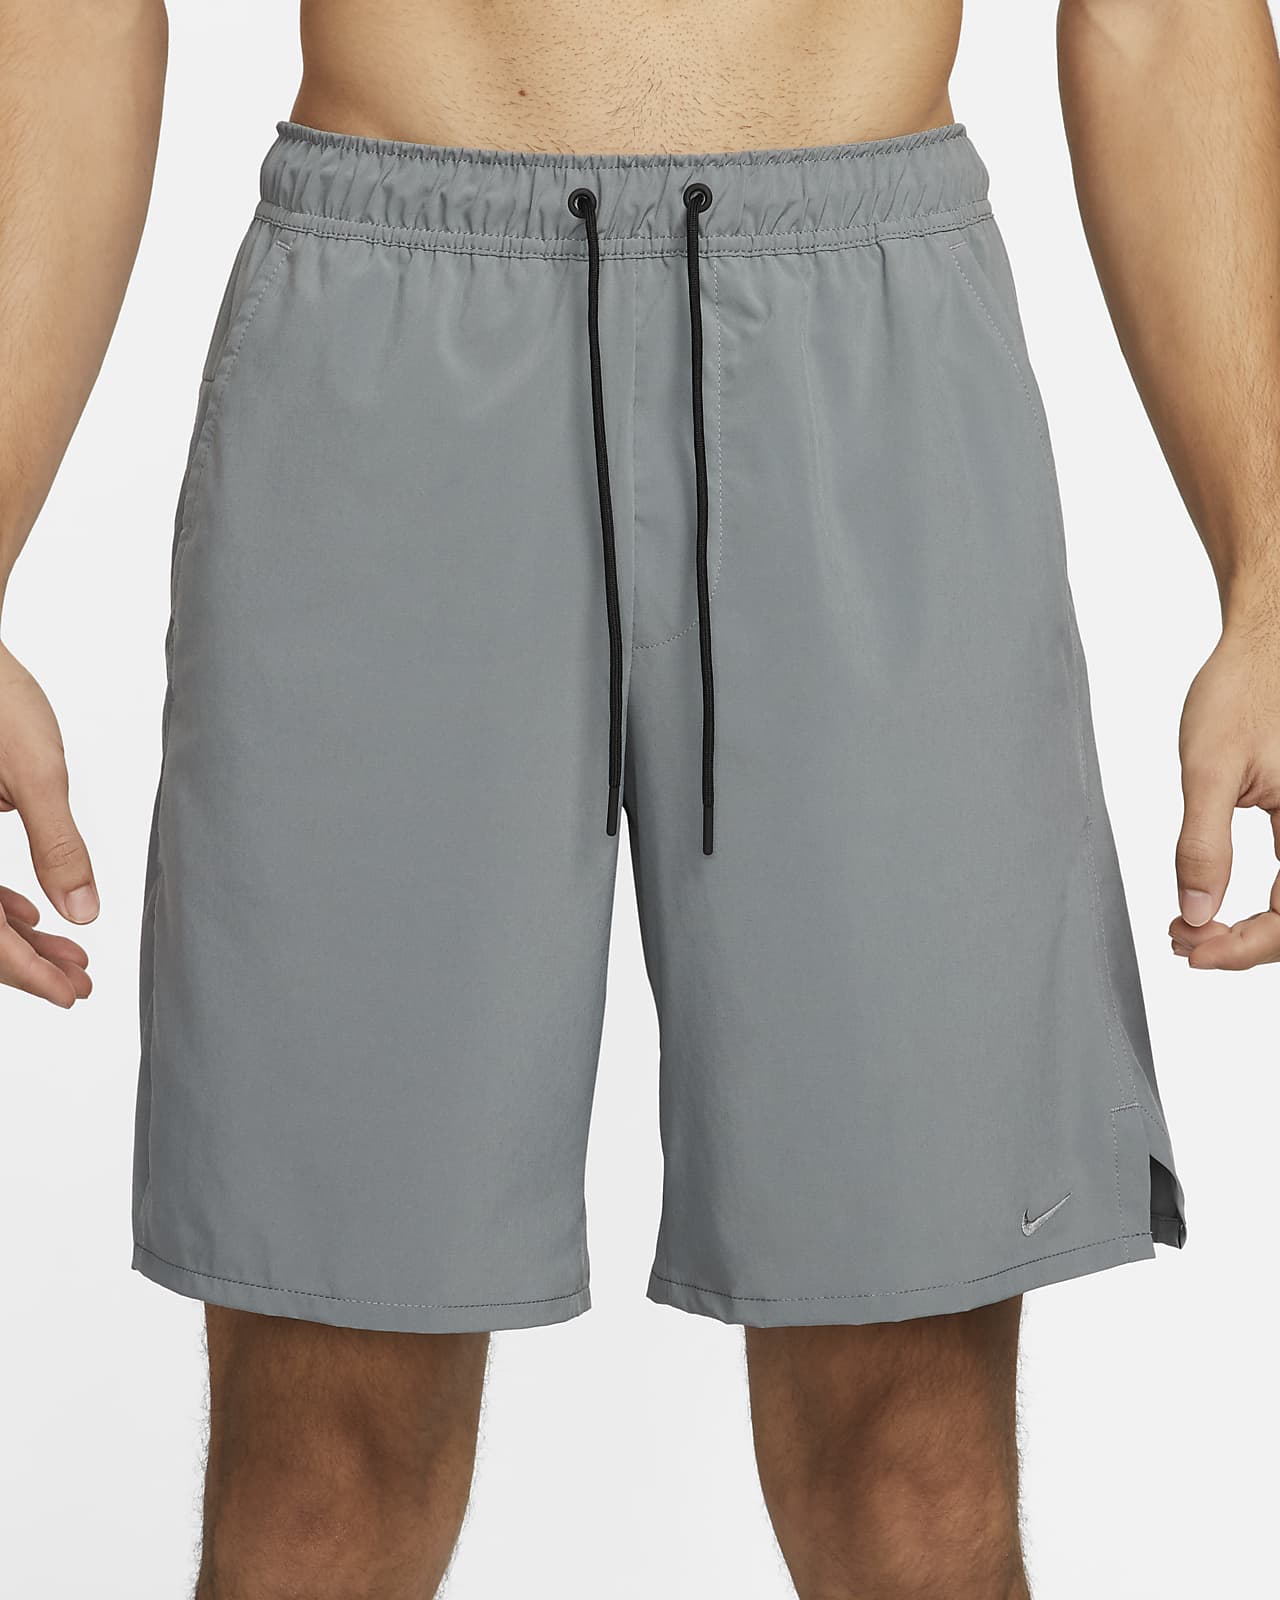 Shorts Nike Dri-FIT Unlimited Masculino - Preto